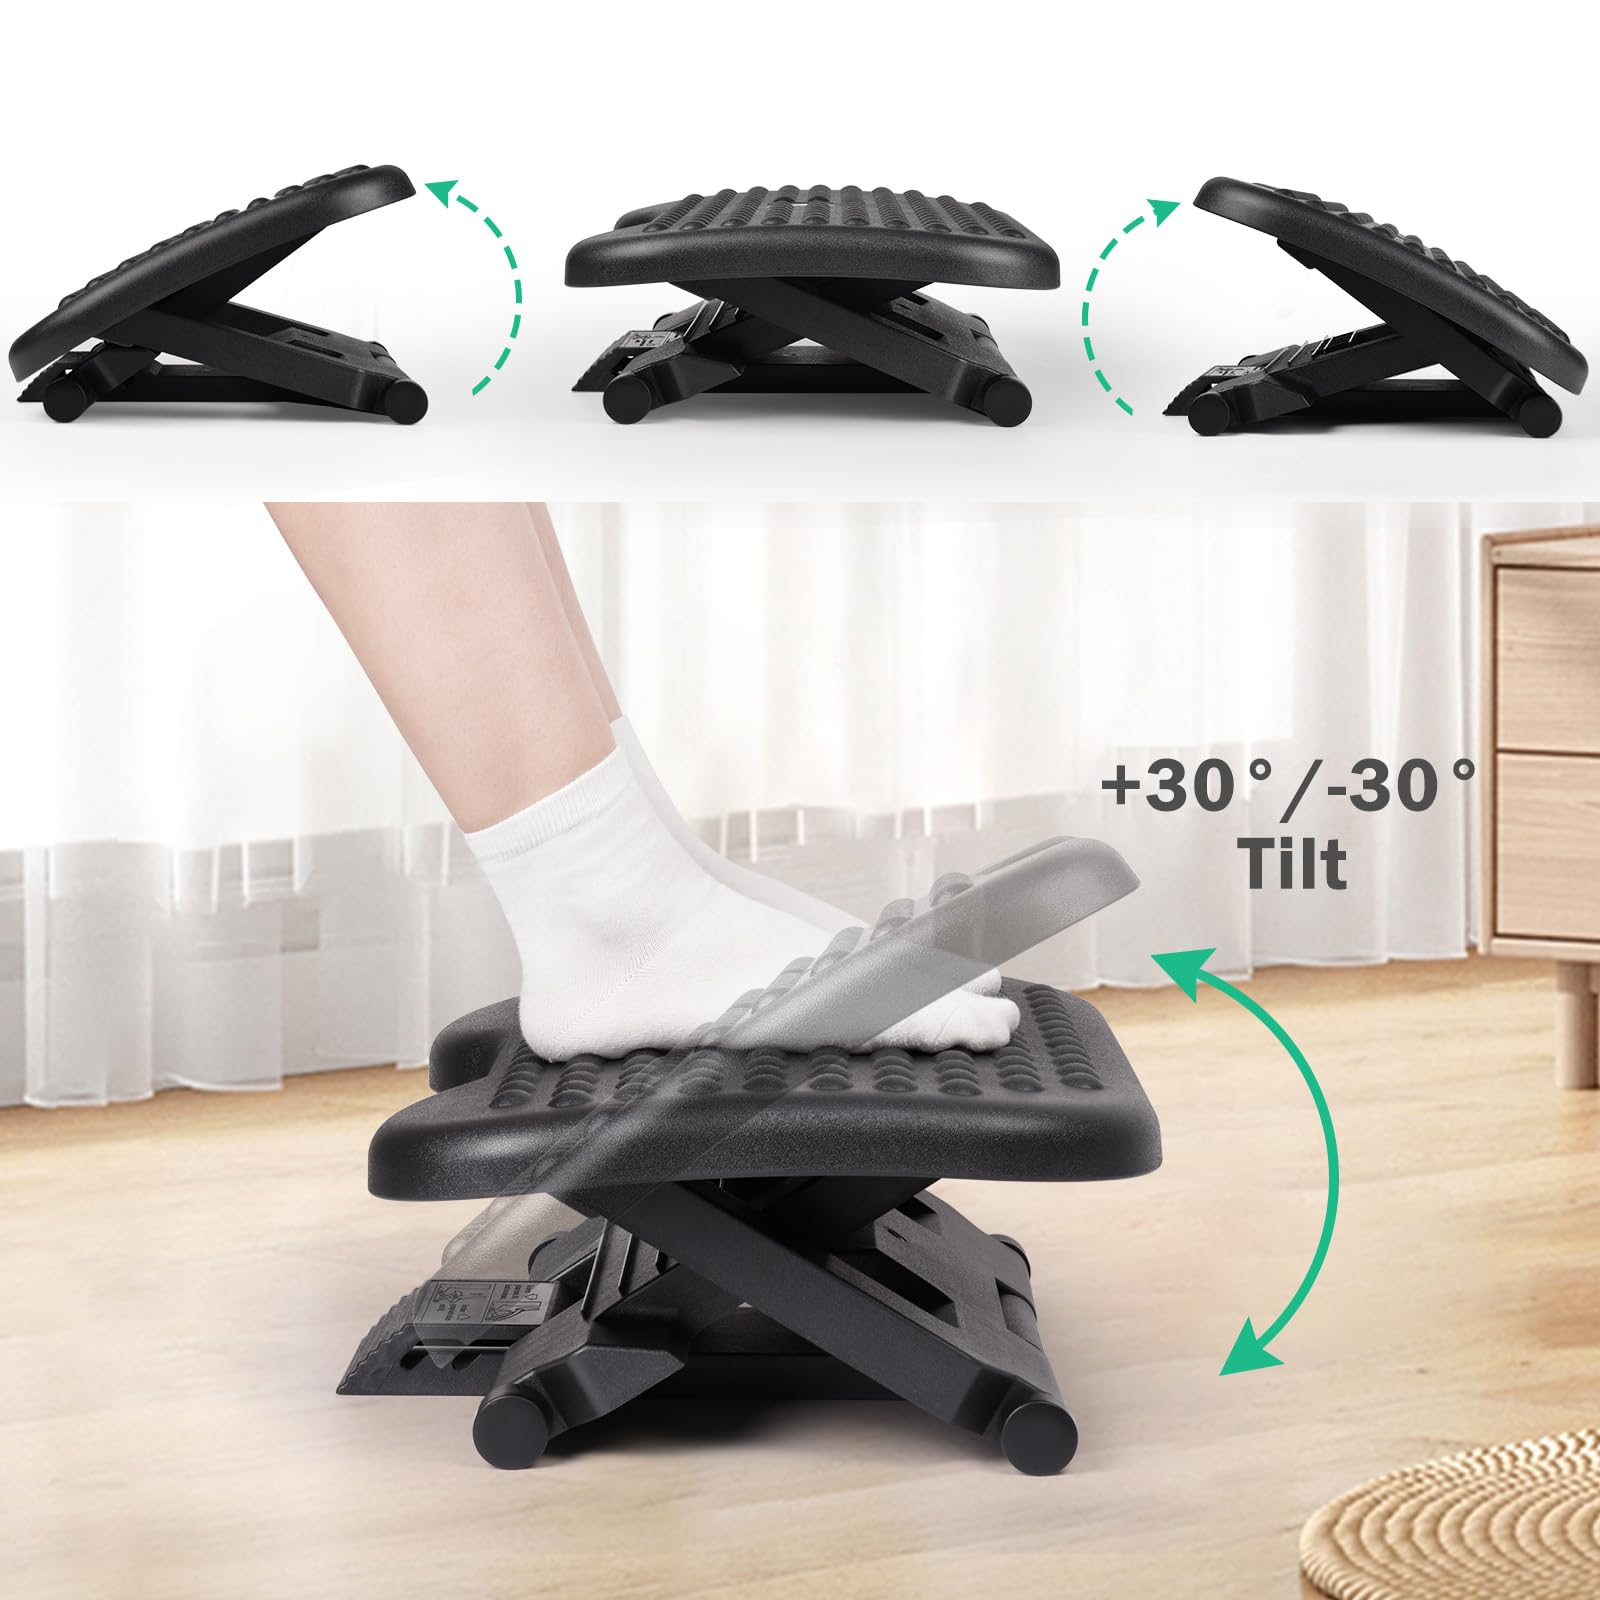 Auslar Foot Rest for Under Desk at Work, Ergonomic Adjustable Foot Rest with Massage Texture Board, Under Desk Foot Stool for Office, Home